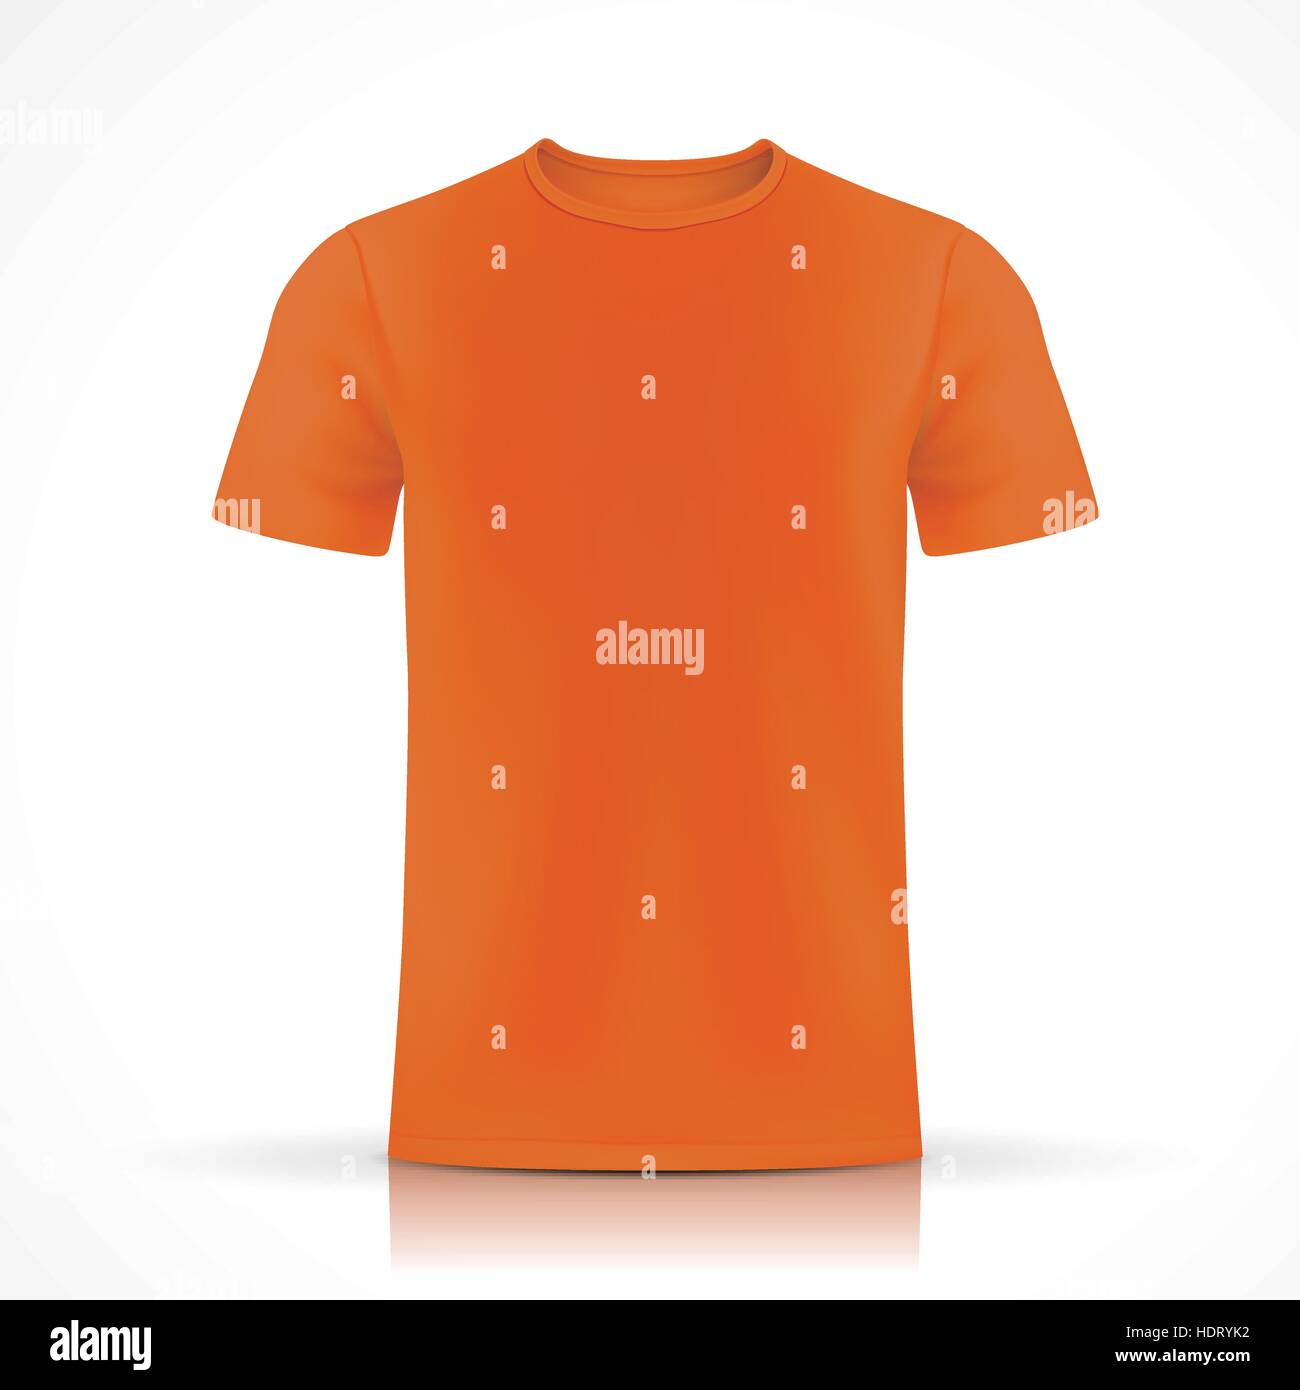 Orange T Shirt Template